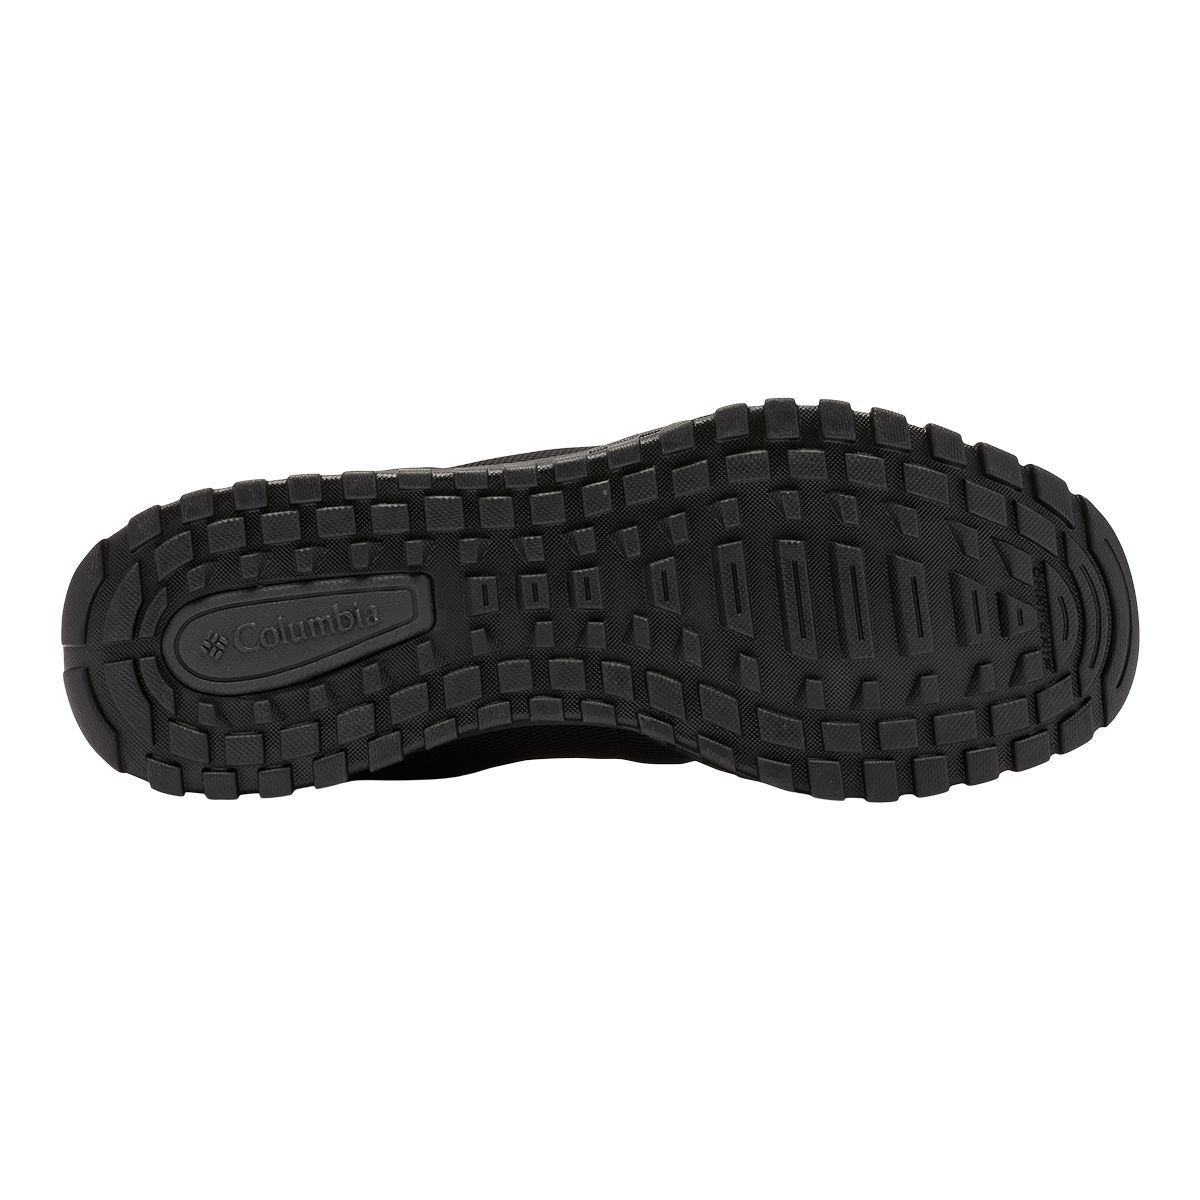 Skechers Men's Selmen Mid Waterproof Hiking Shoes